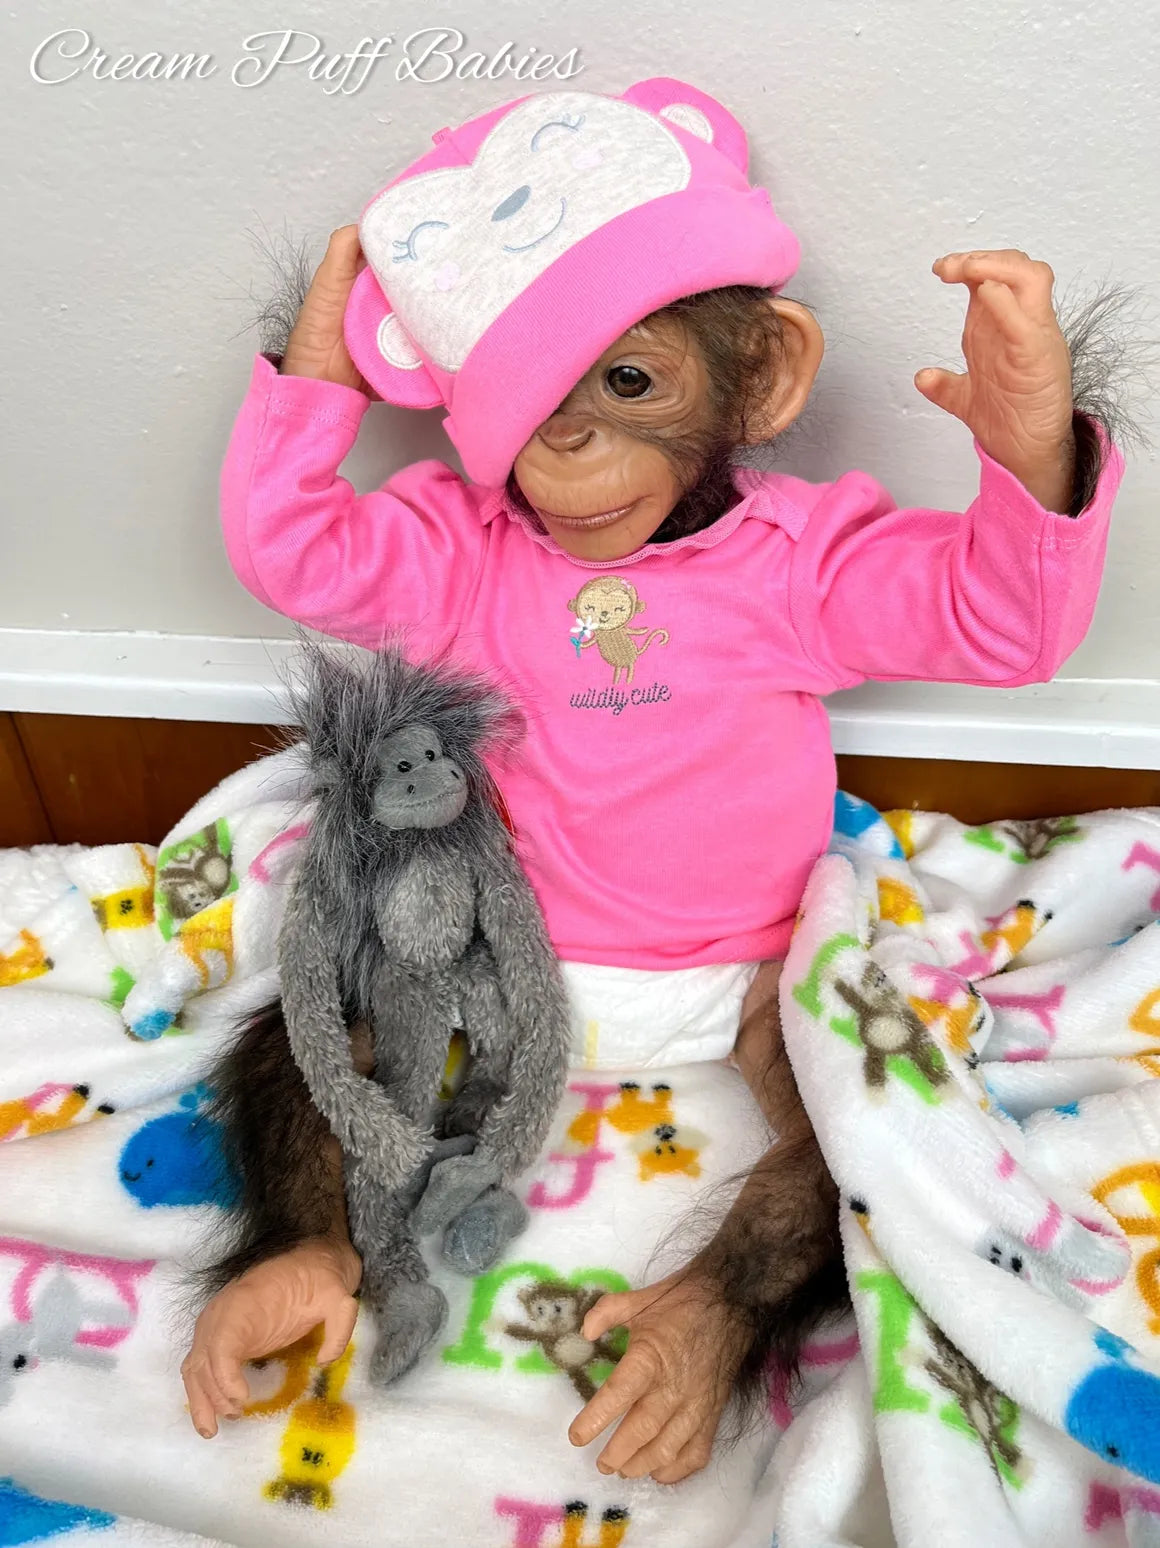 Baby Chimpanzee Bonnie